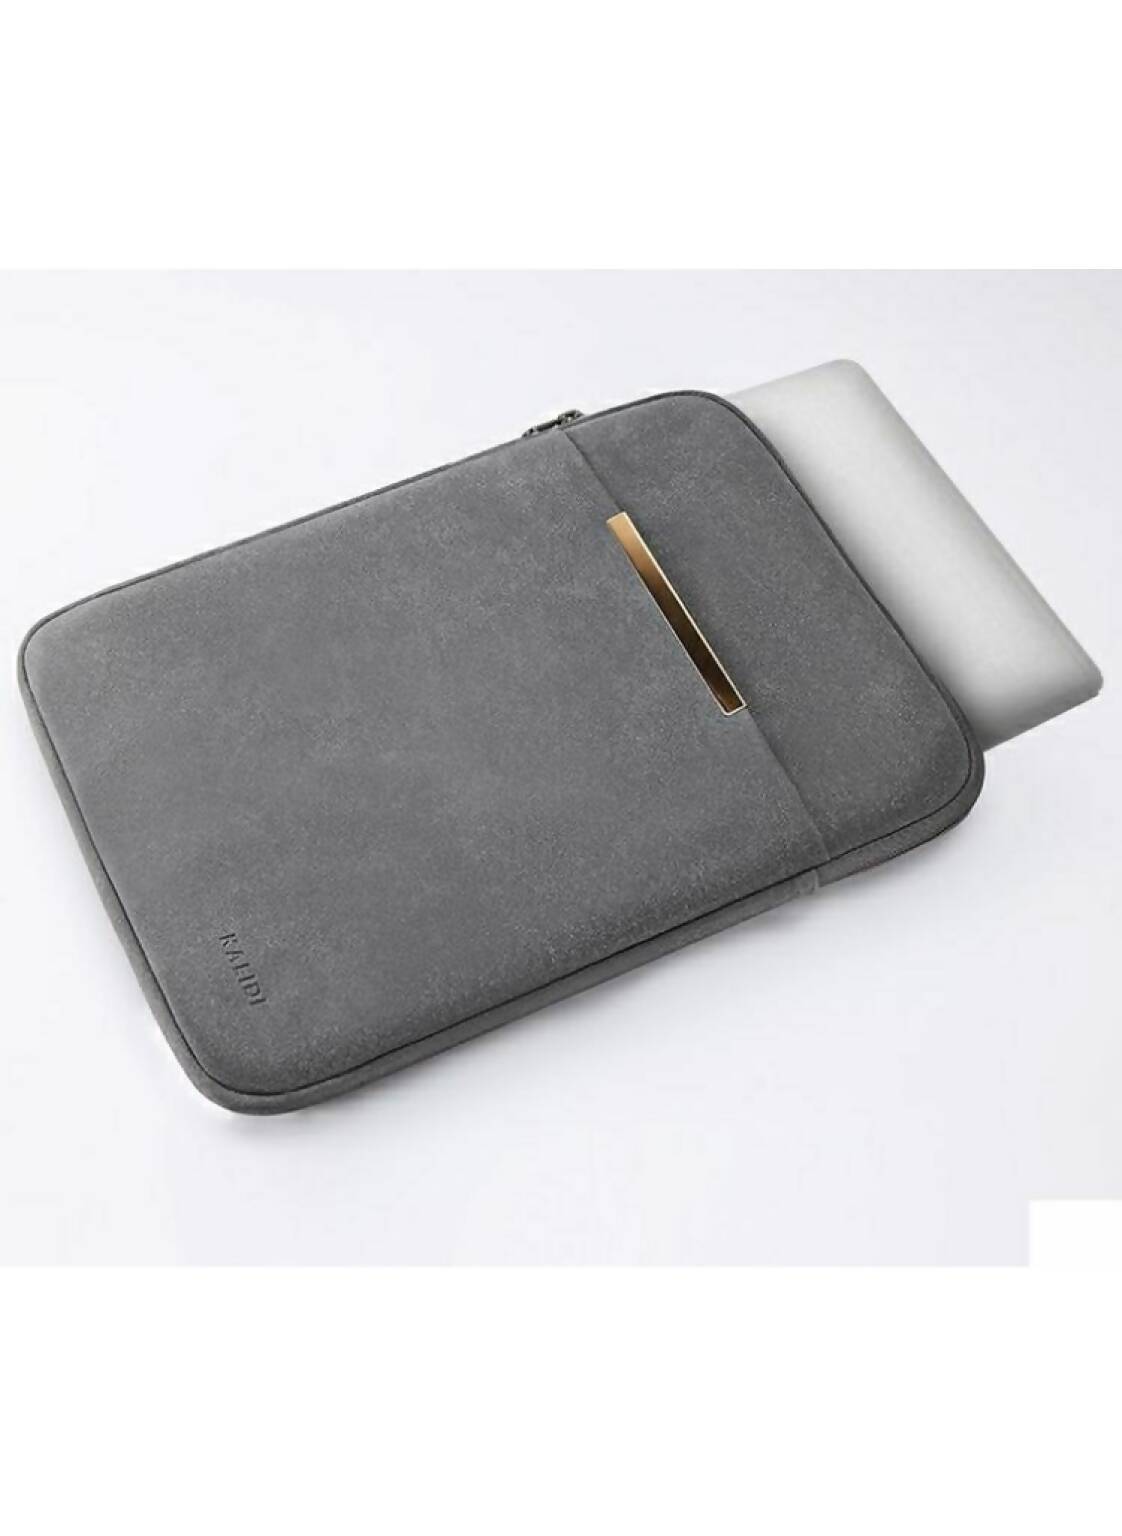 KALIDI Laptop Bag Sleeve 14 inch Notebook Leather Sleeve